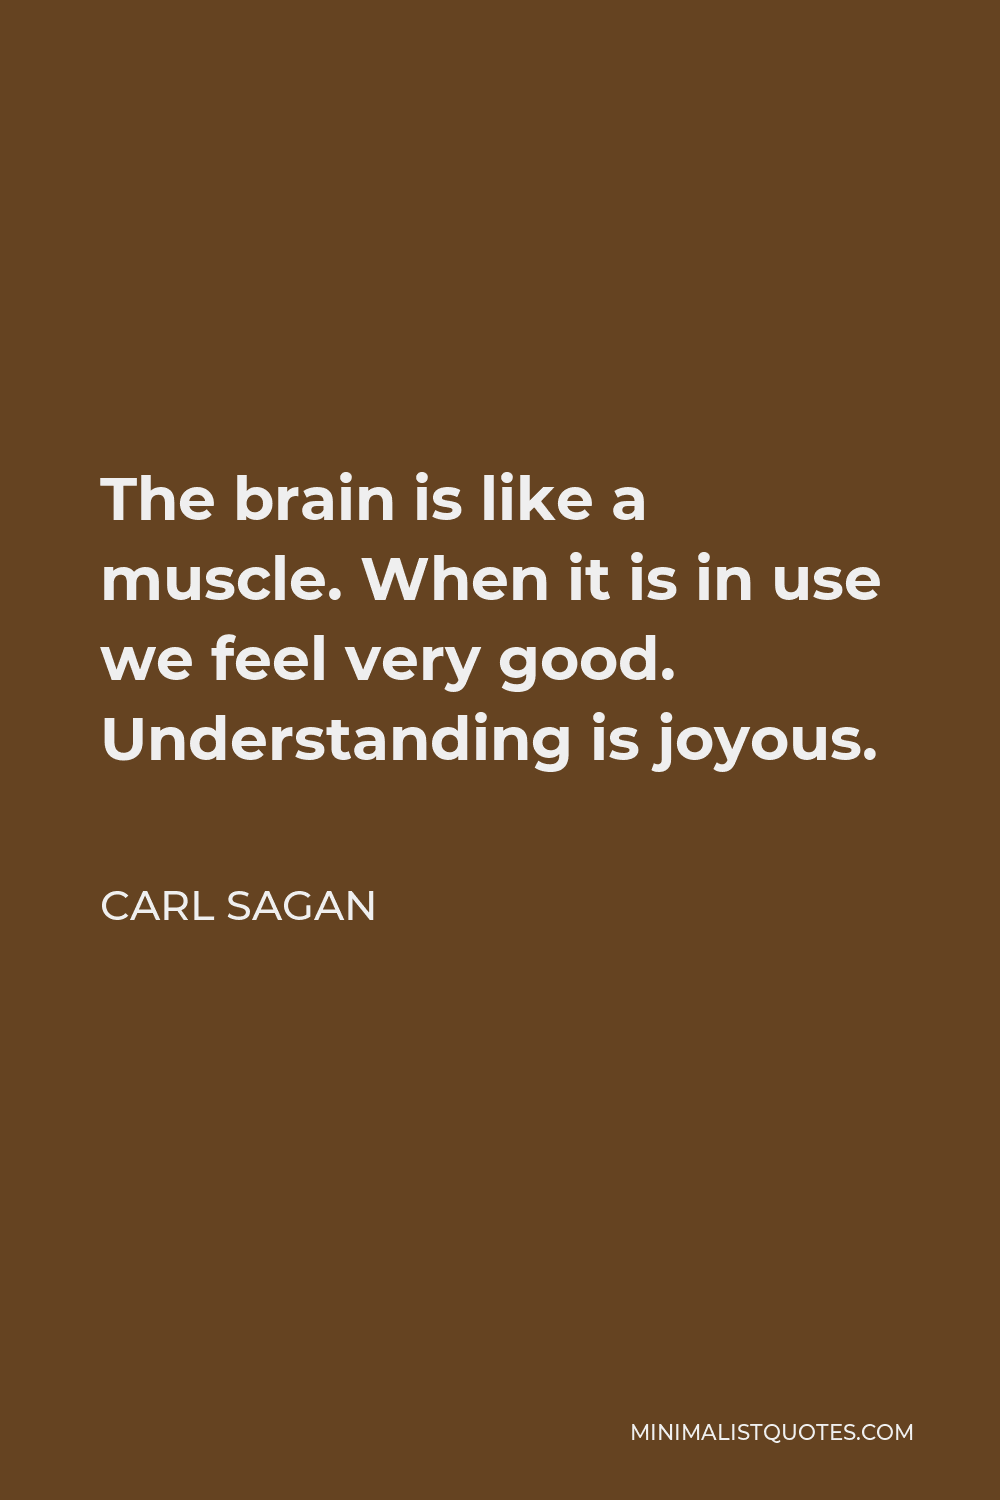 Carl Sagan Quote - The brain is like a muscle. When it is in use we feel very good. Understanding is joyous.